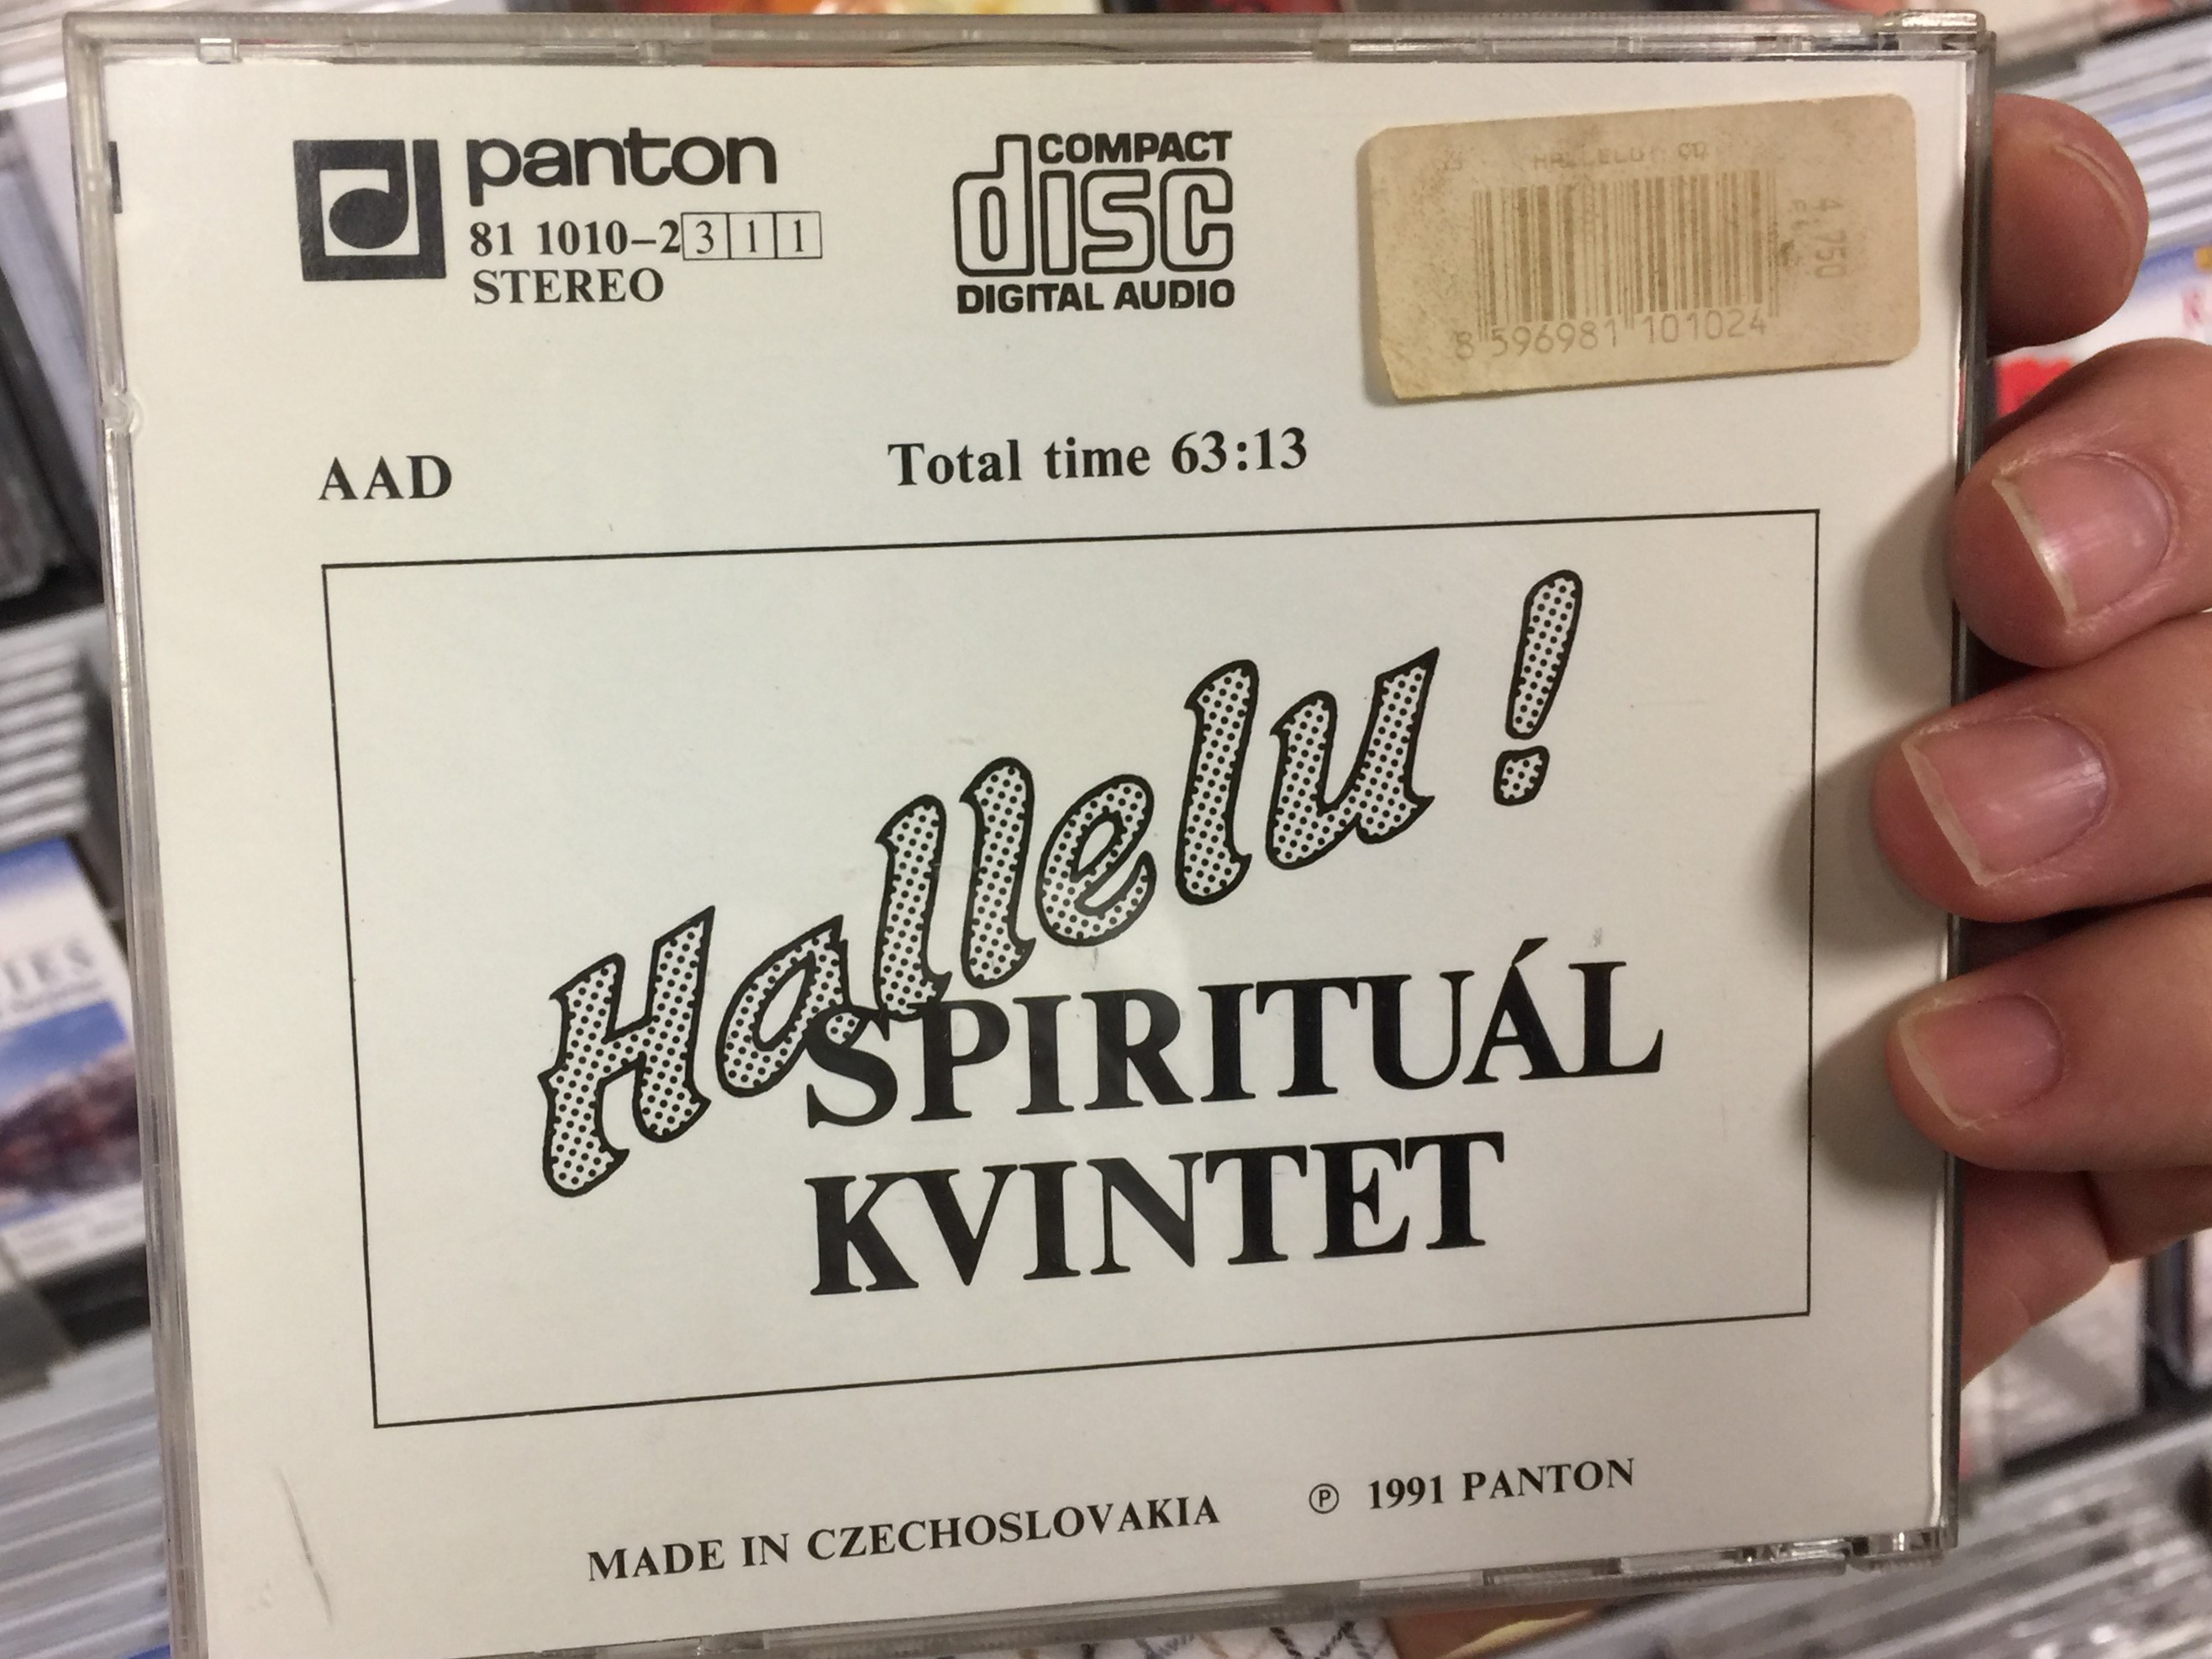 hallelu-spiritu-l-kvintet-spirtuals-gospels-panton-audio-cd-1991-stereo-81-1010-2-311-2-.jpg